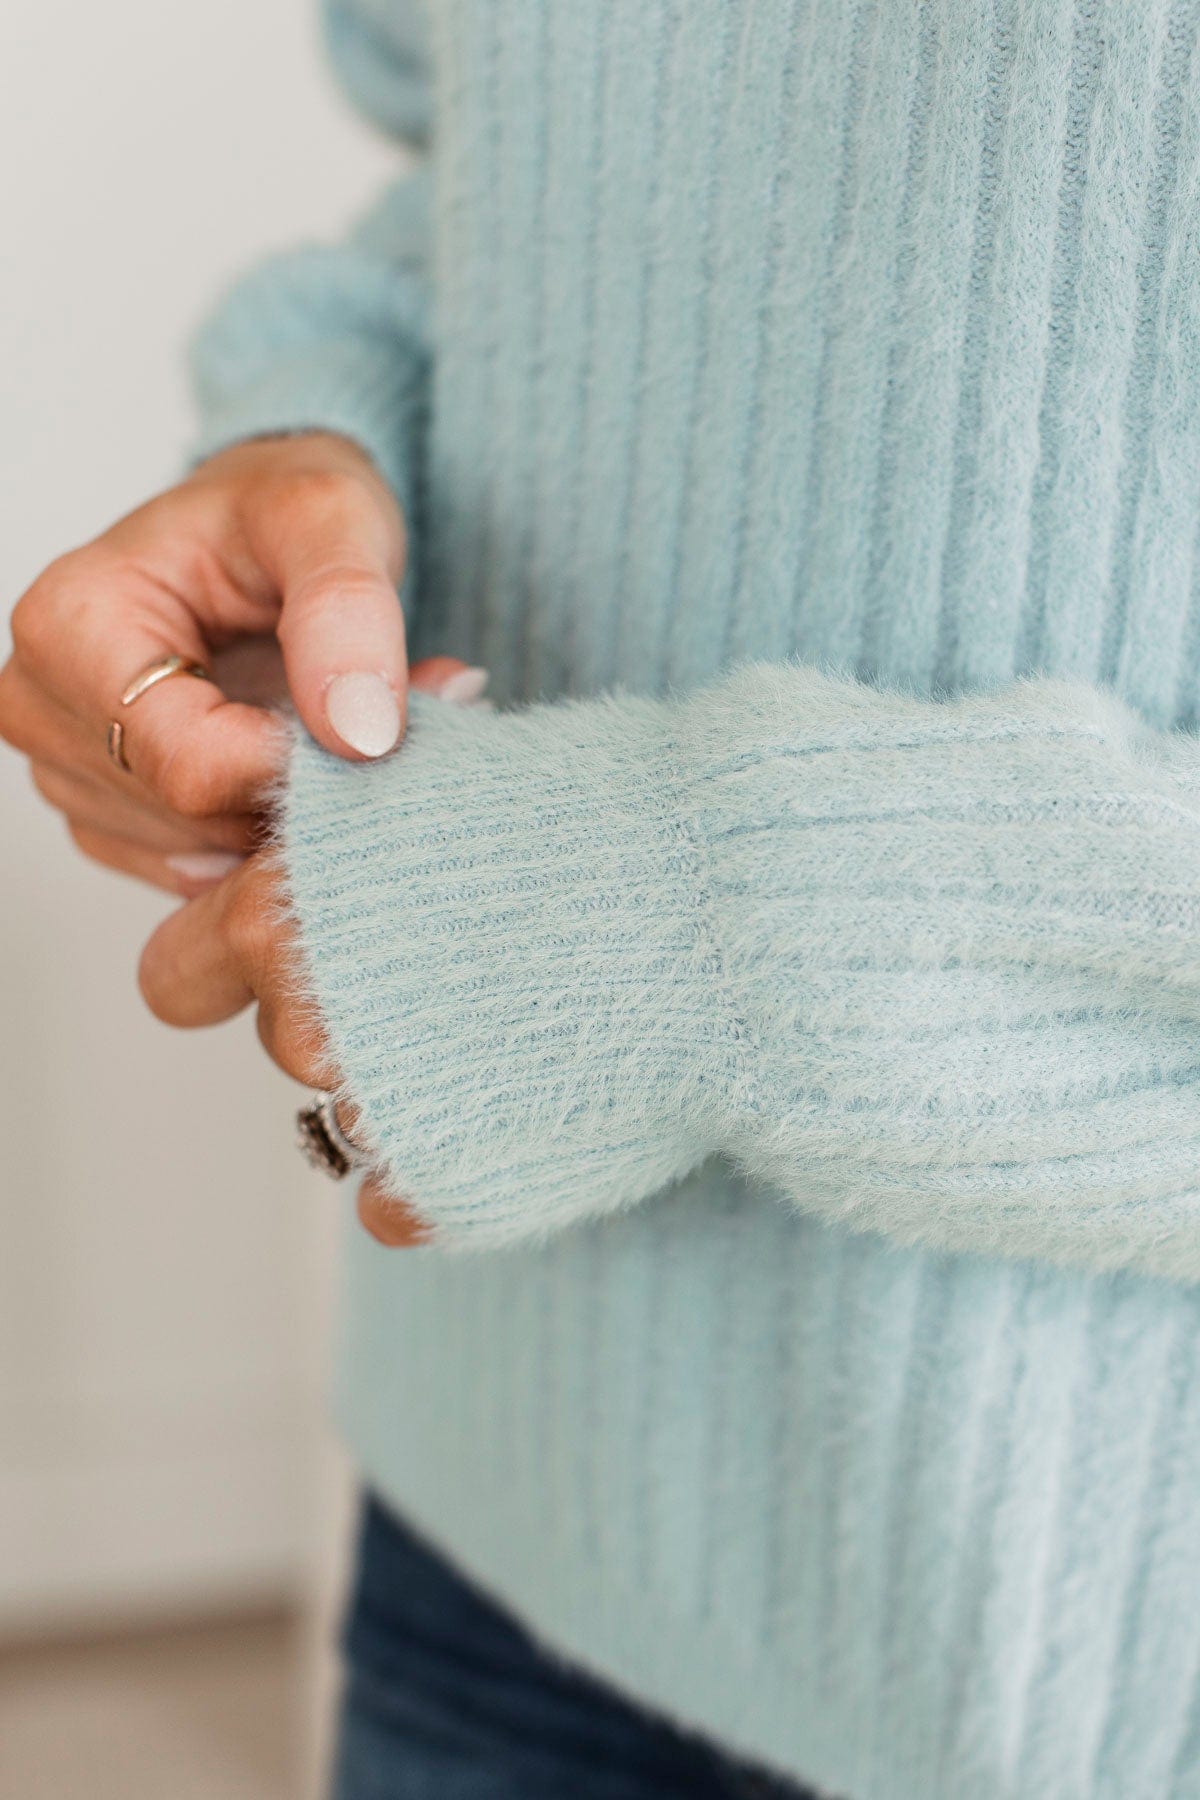 Like No Other Fuzzy Knit Sweater- Light Blue